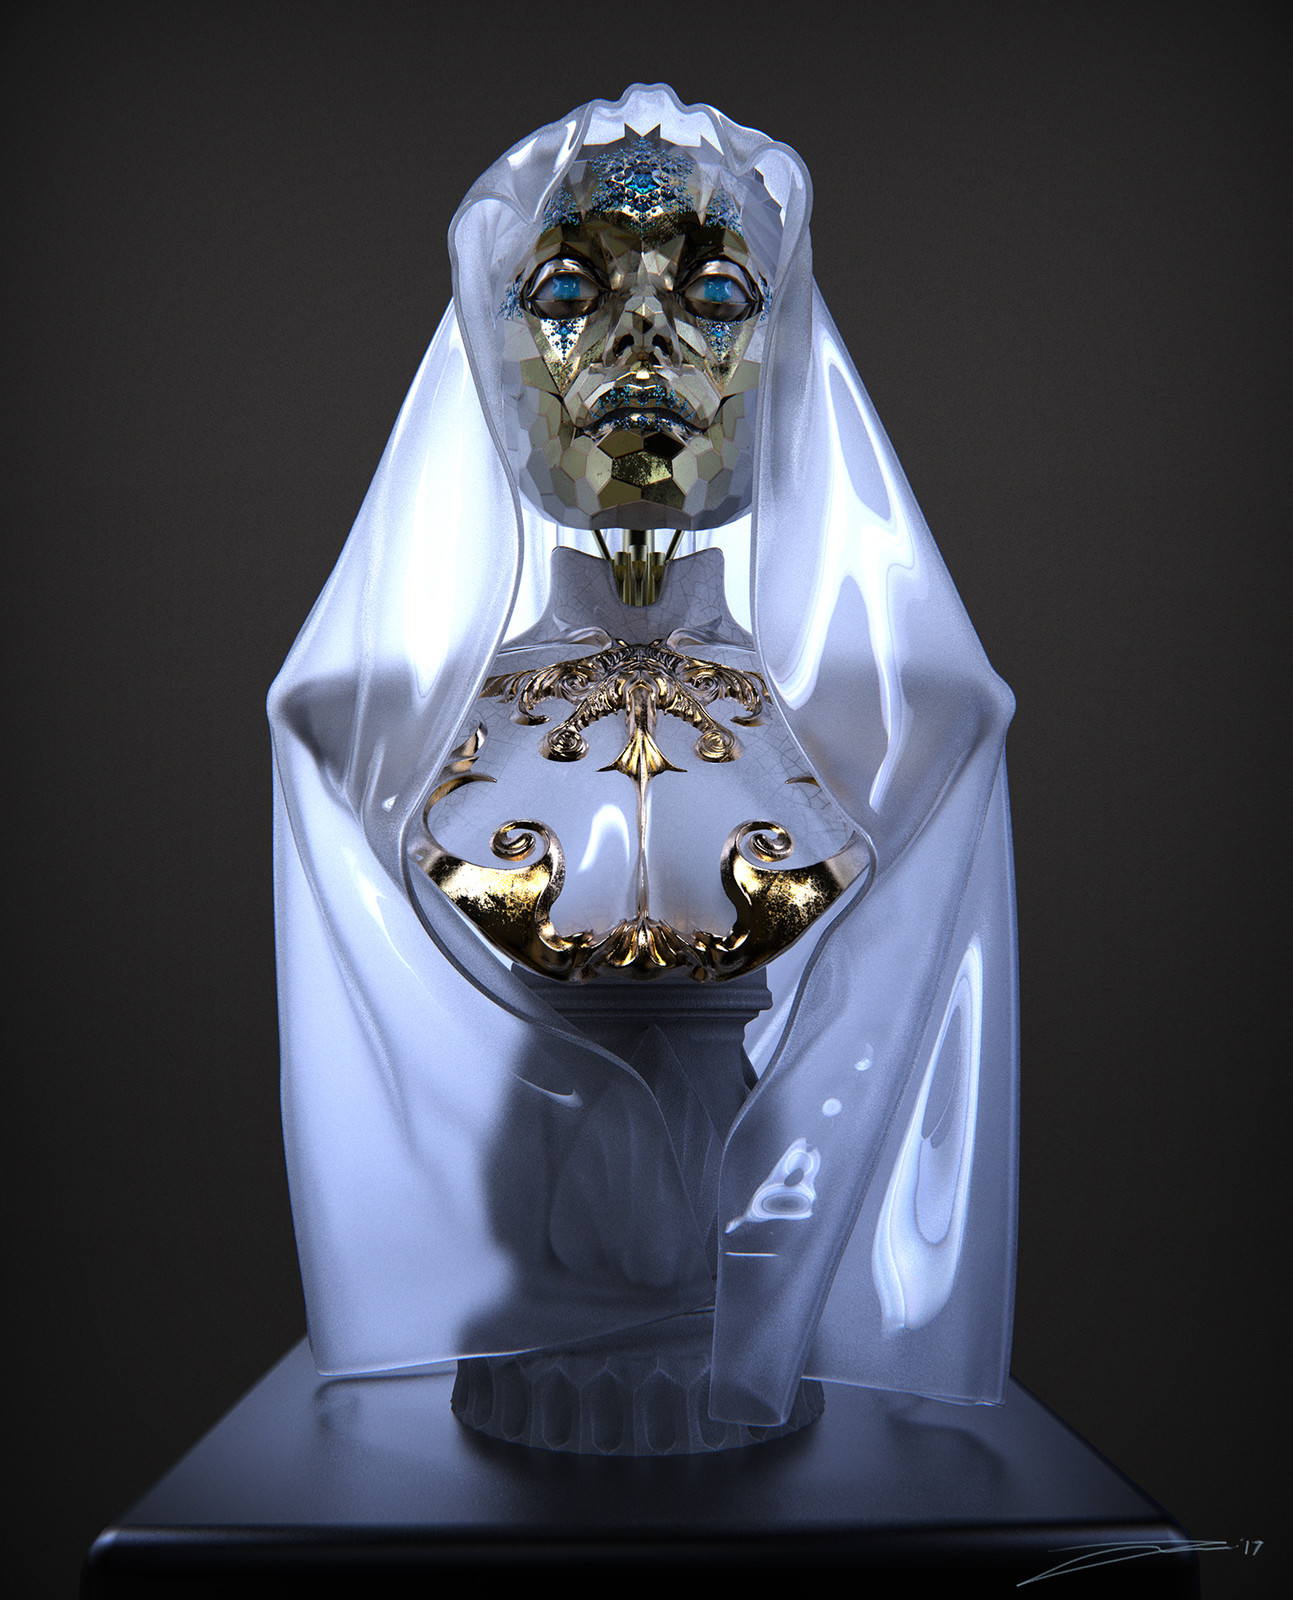 Our Lady of Global Illumination (AKA Wintermute)